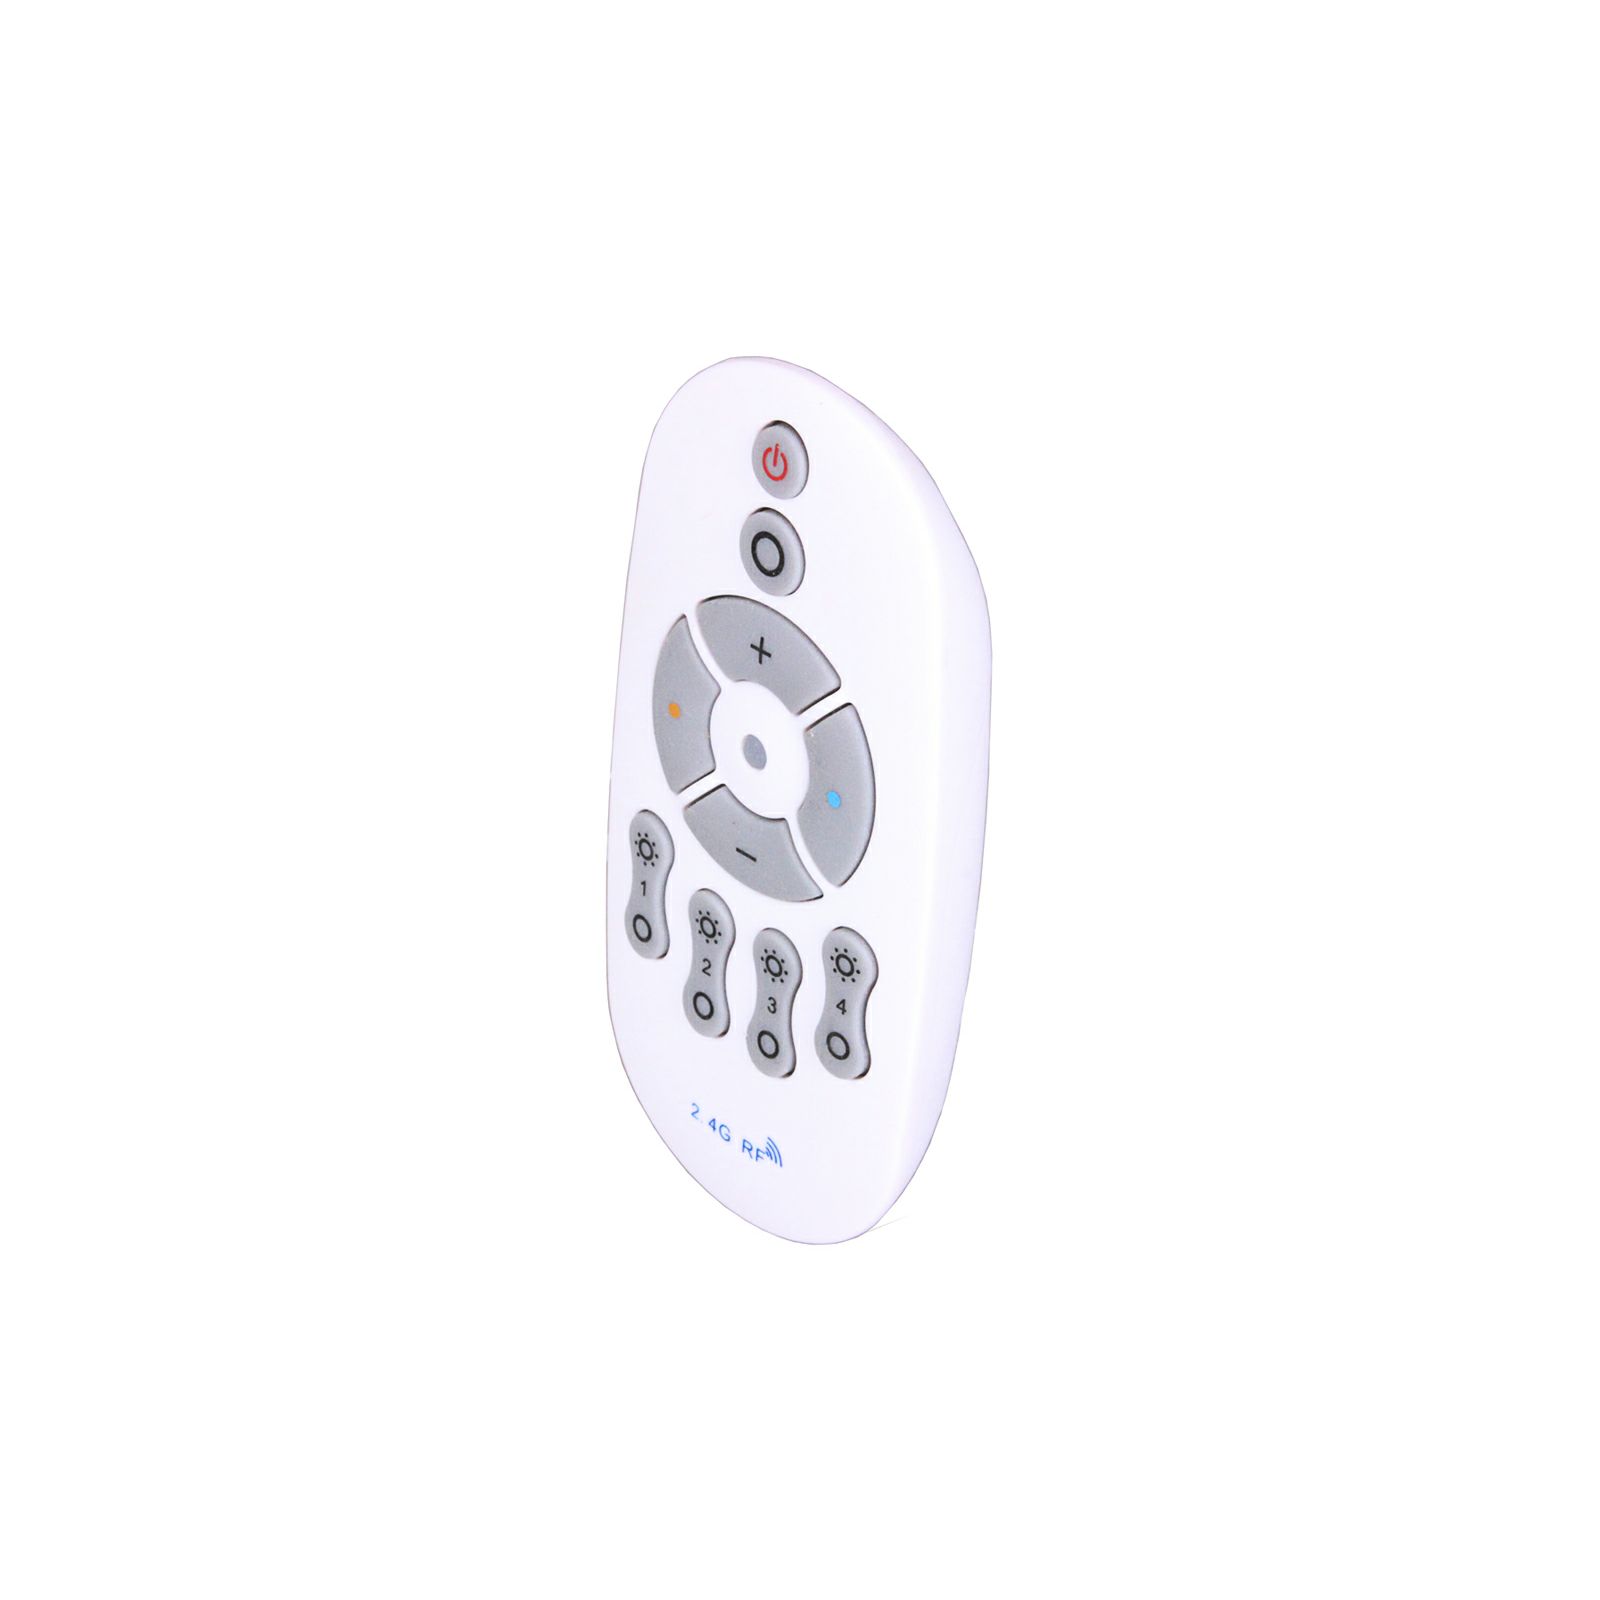 Patona wireless remote control for dimmable transformer adapter 11x5,2x2 cm WiFi daljinski upravljač